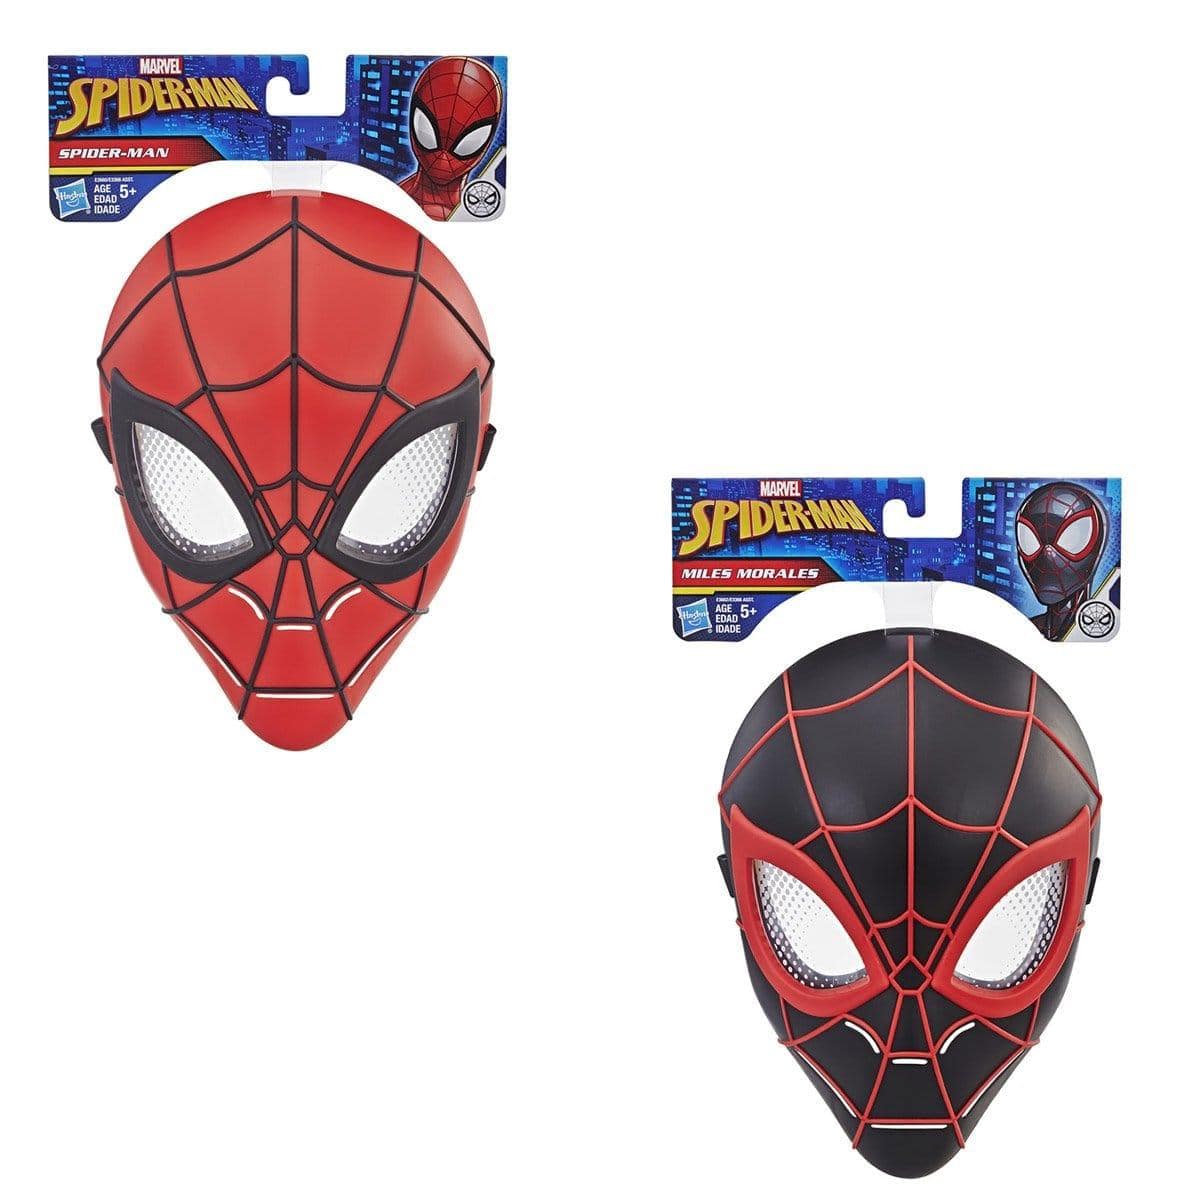 Masques en plastique de Spider-Man, assortiment